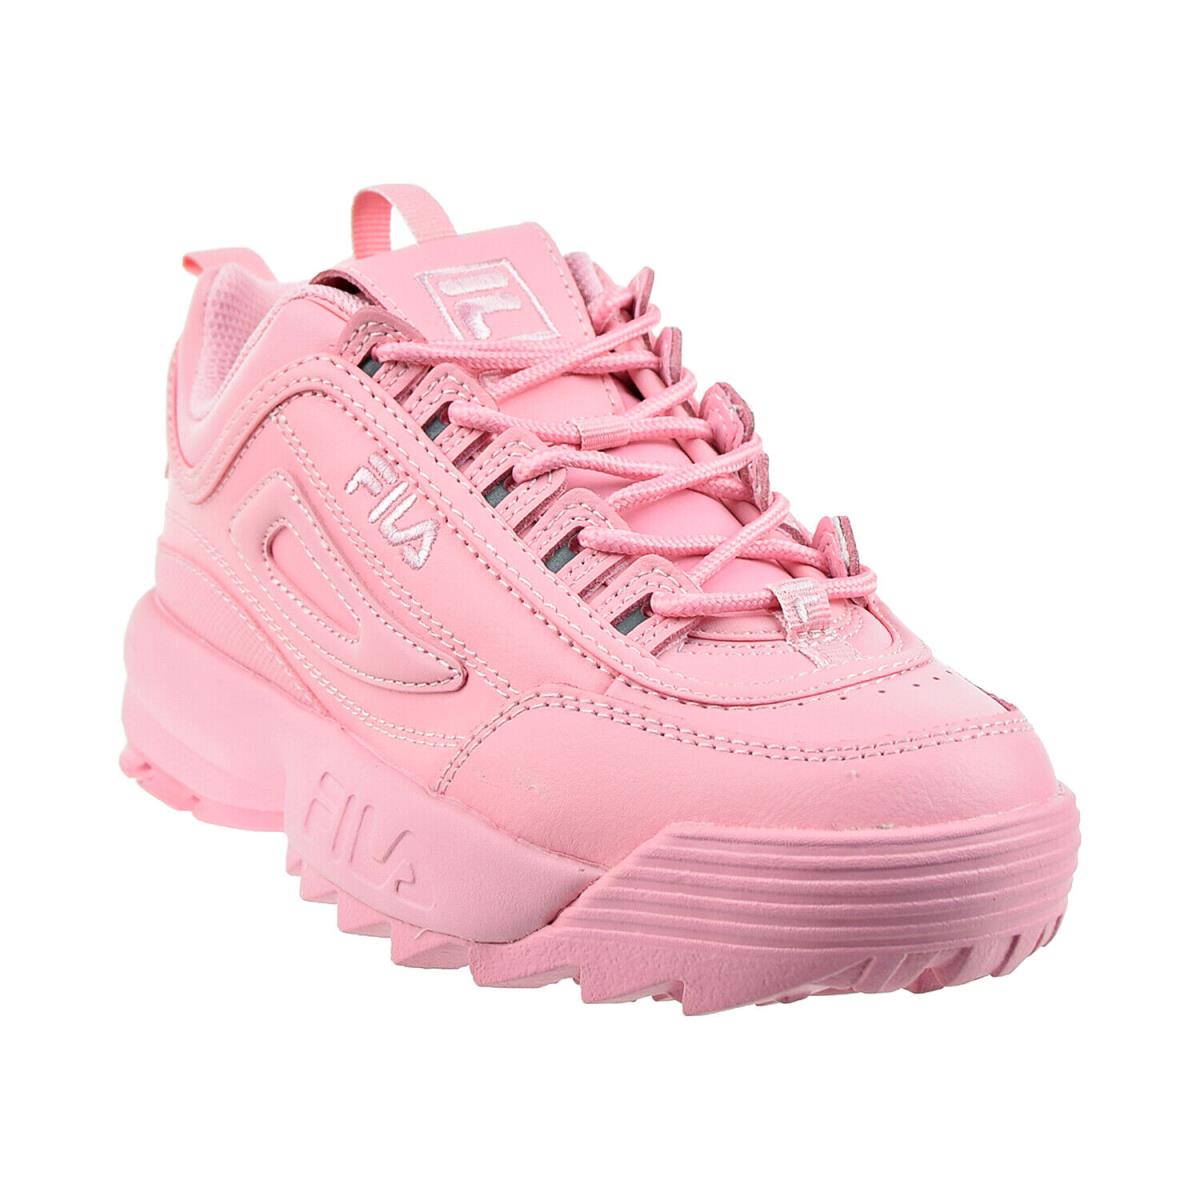 Fila Disruptor II Premium Women`s Shoes Coral Blush 5xm01763-651